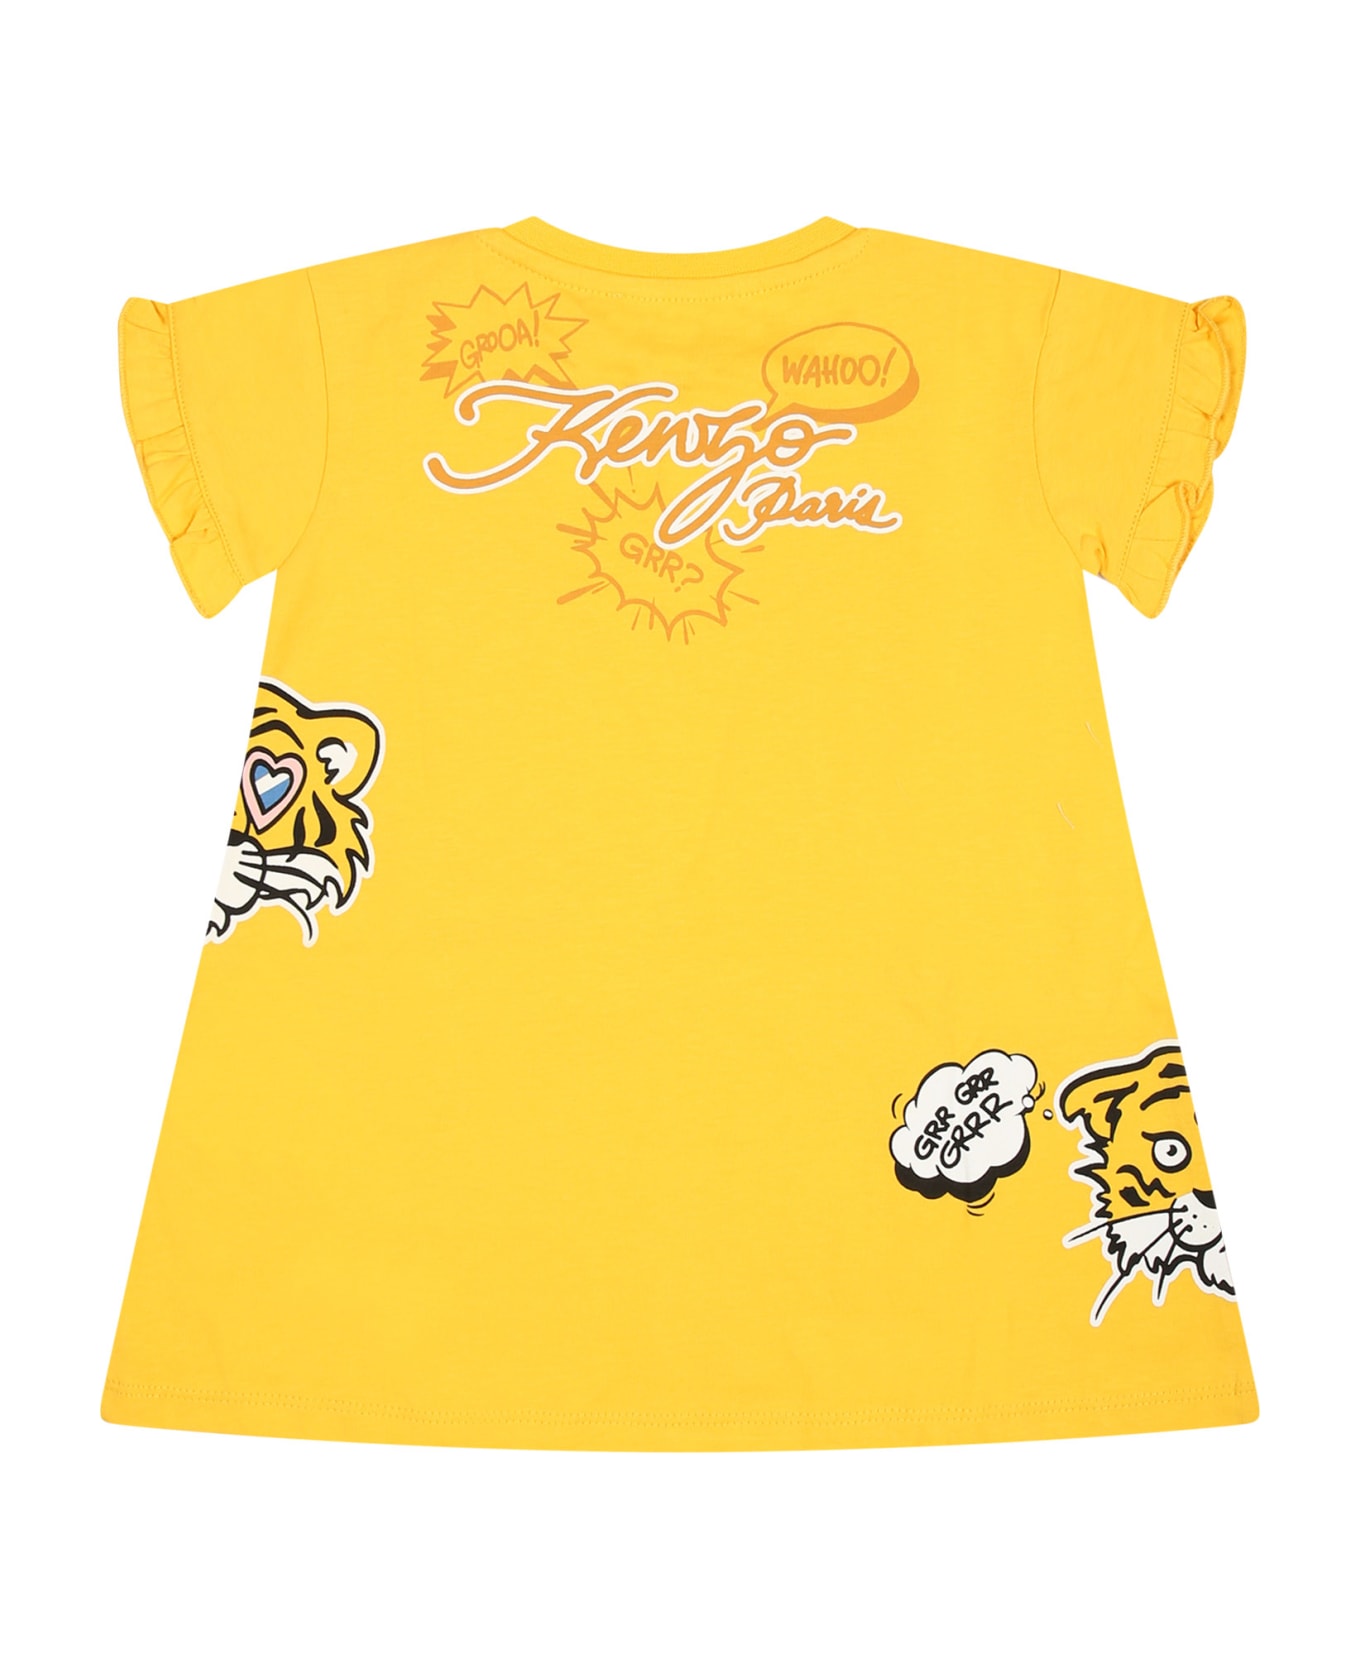 Kenzo Kids Yellow Dress For Baby Girl With Printing And Logo - Yellow